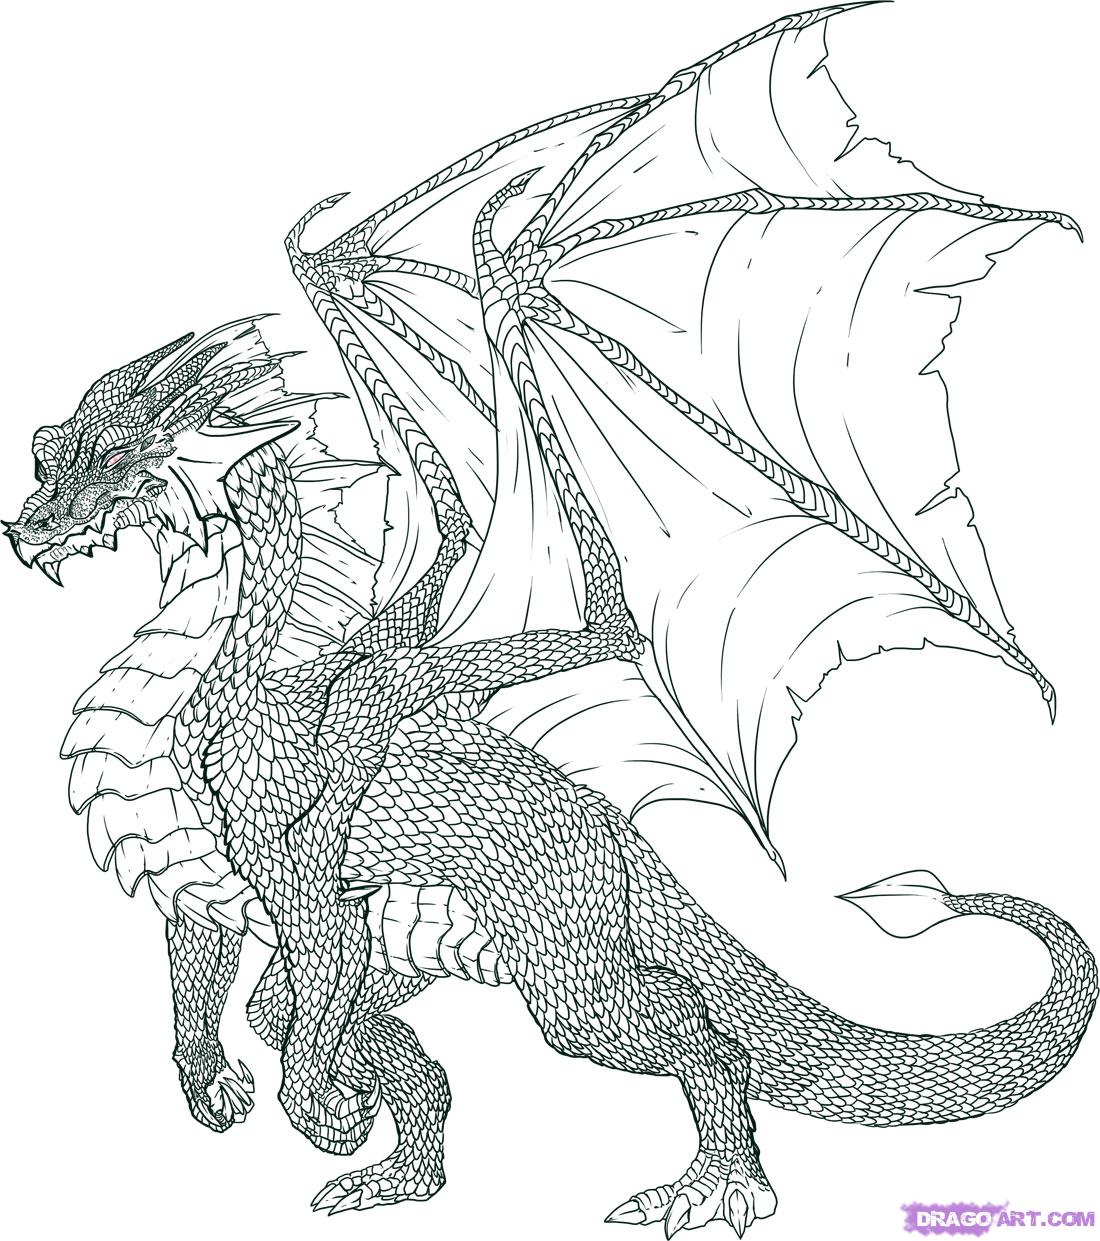 Dragon Drawing – Step-by-Step Dragon Illustration Tutorial